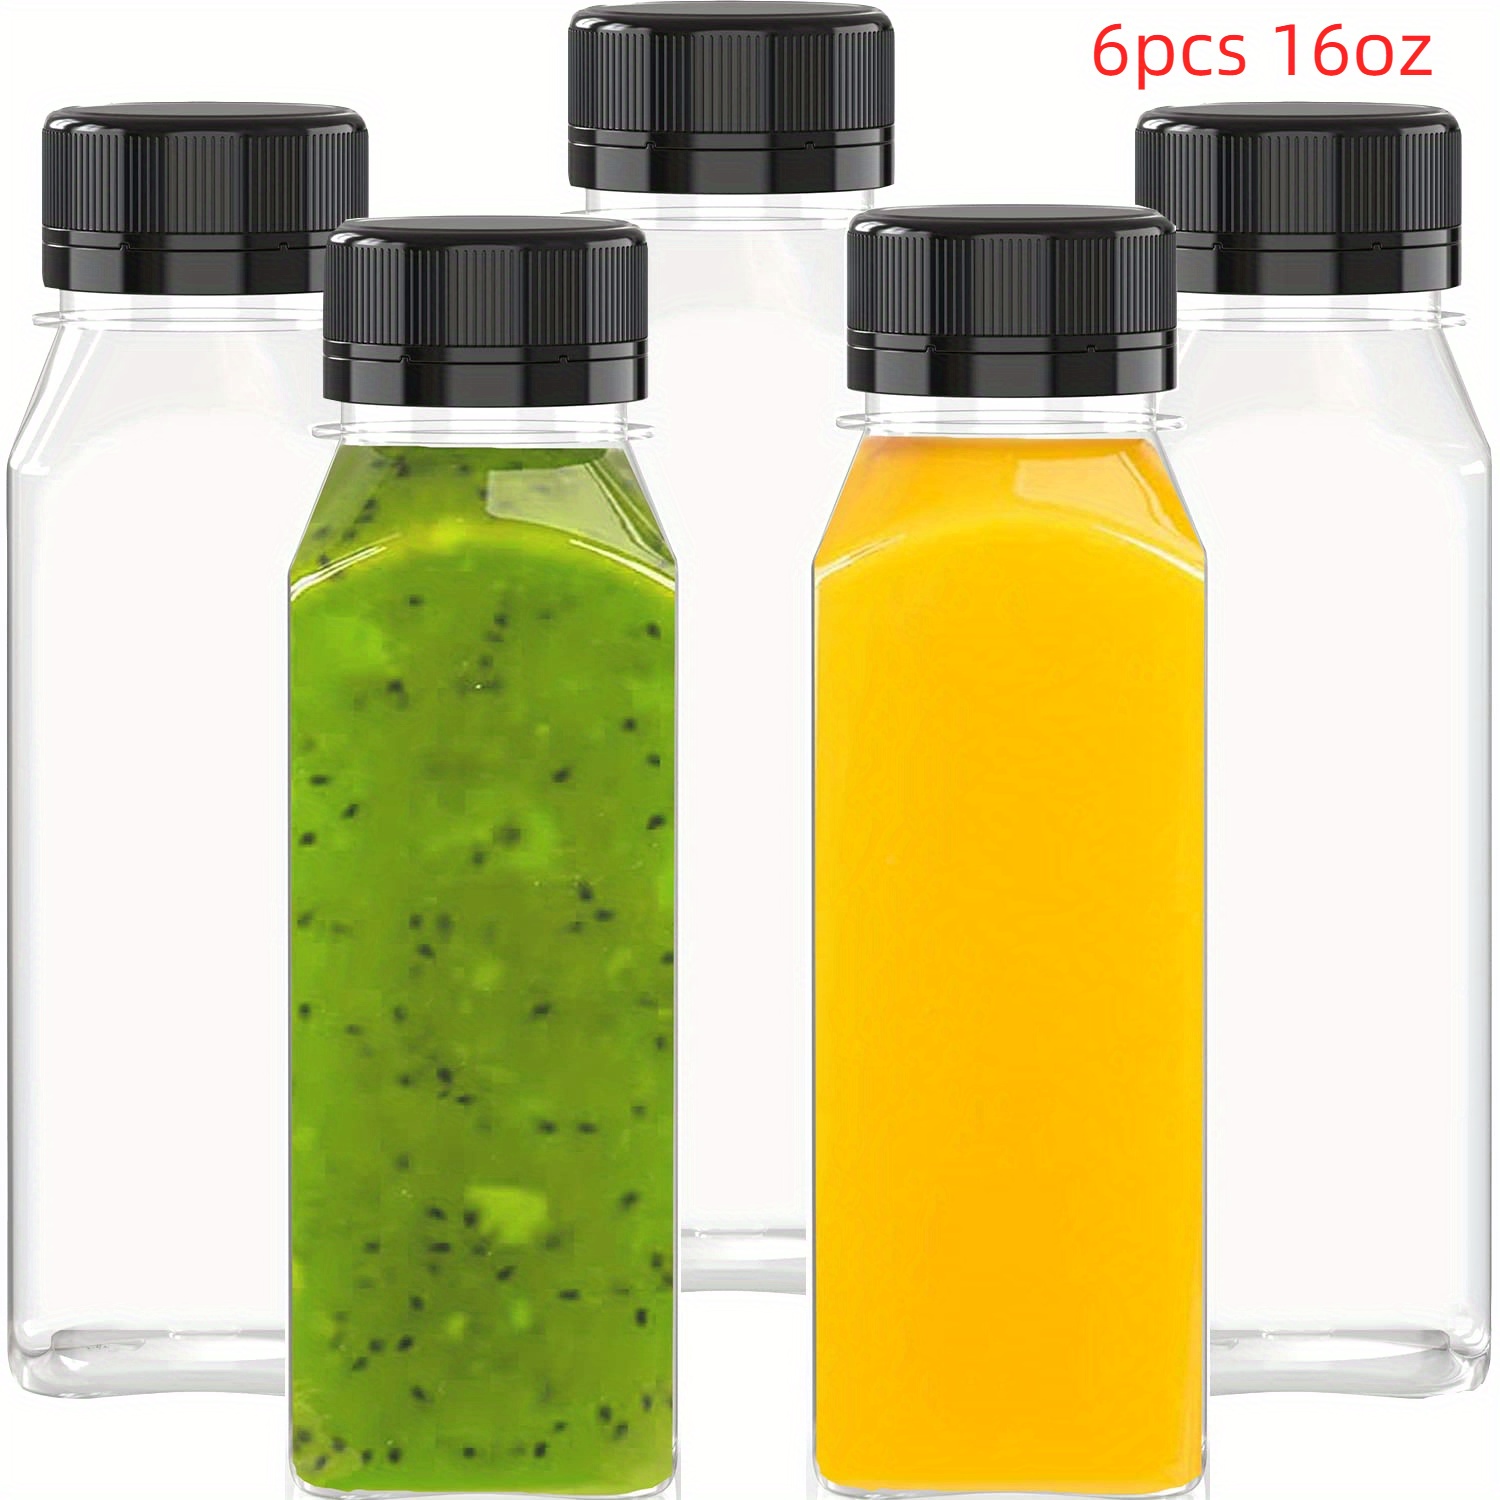 16 oz. Plastic Bottles with Green Tamper Evident Caps, 6-pack